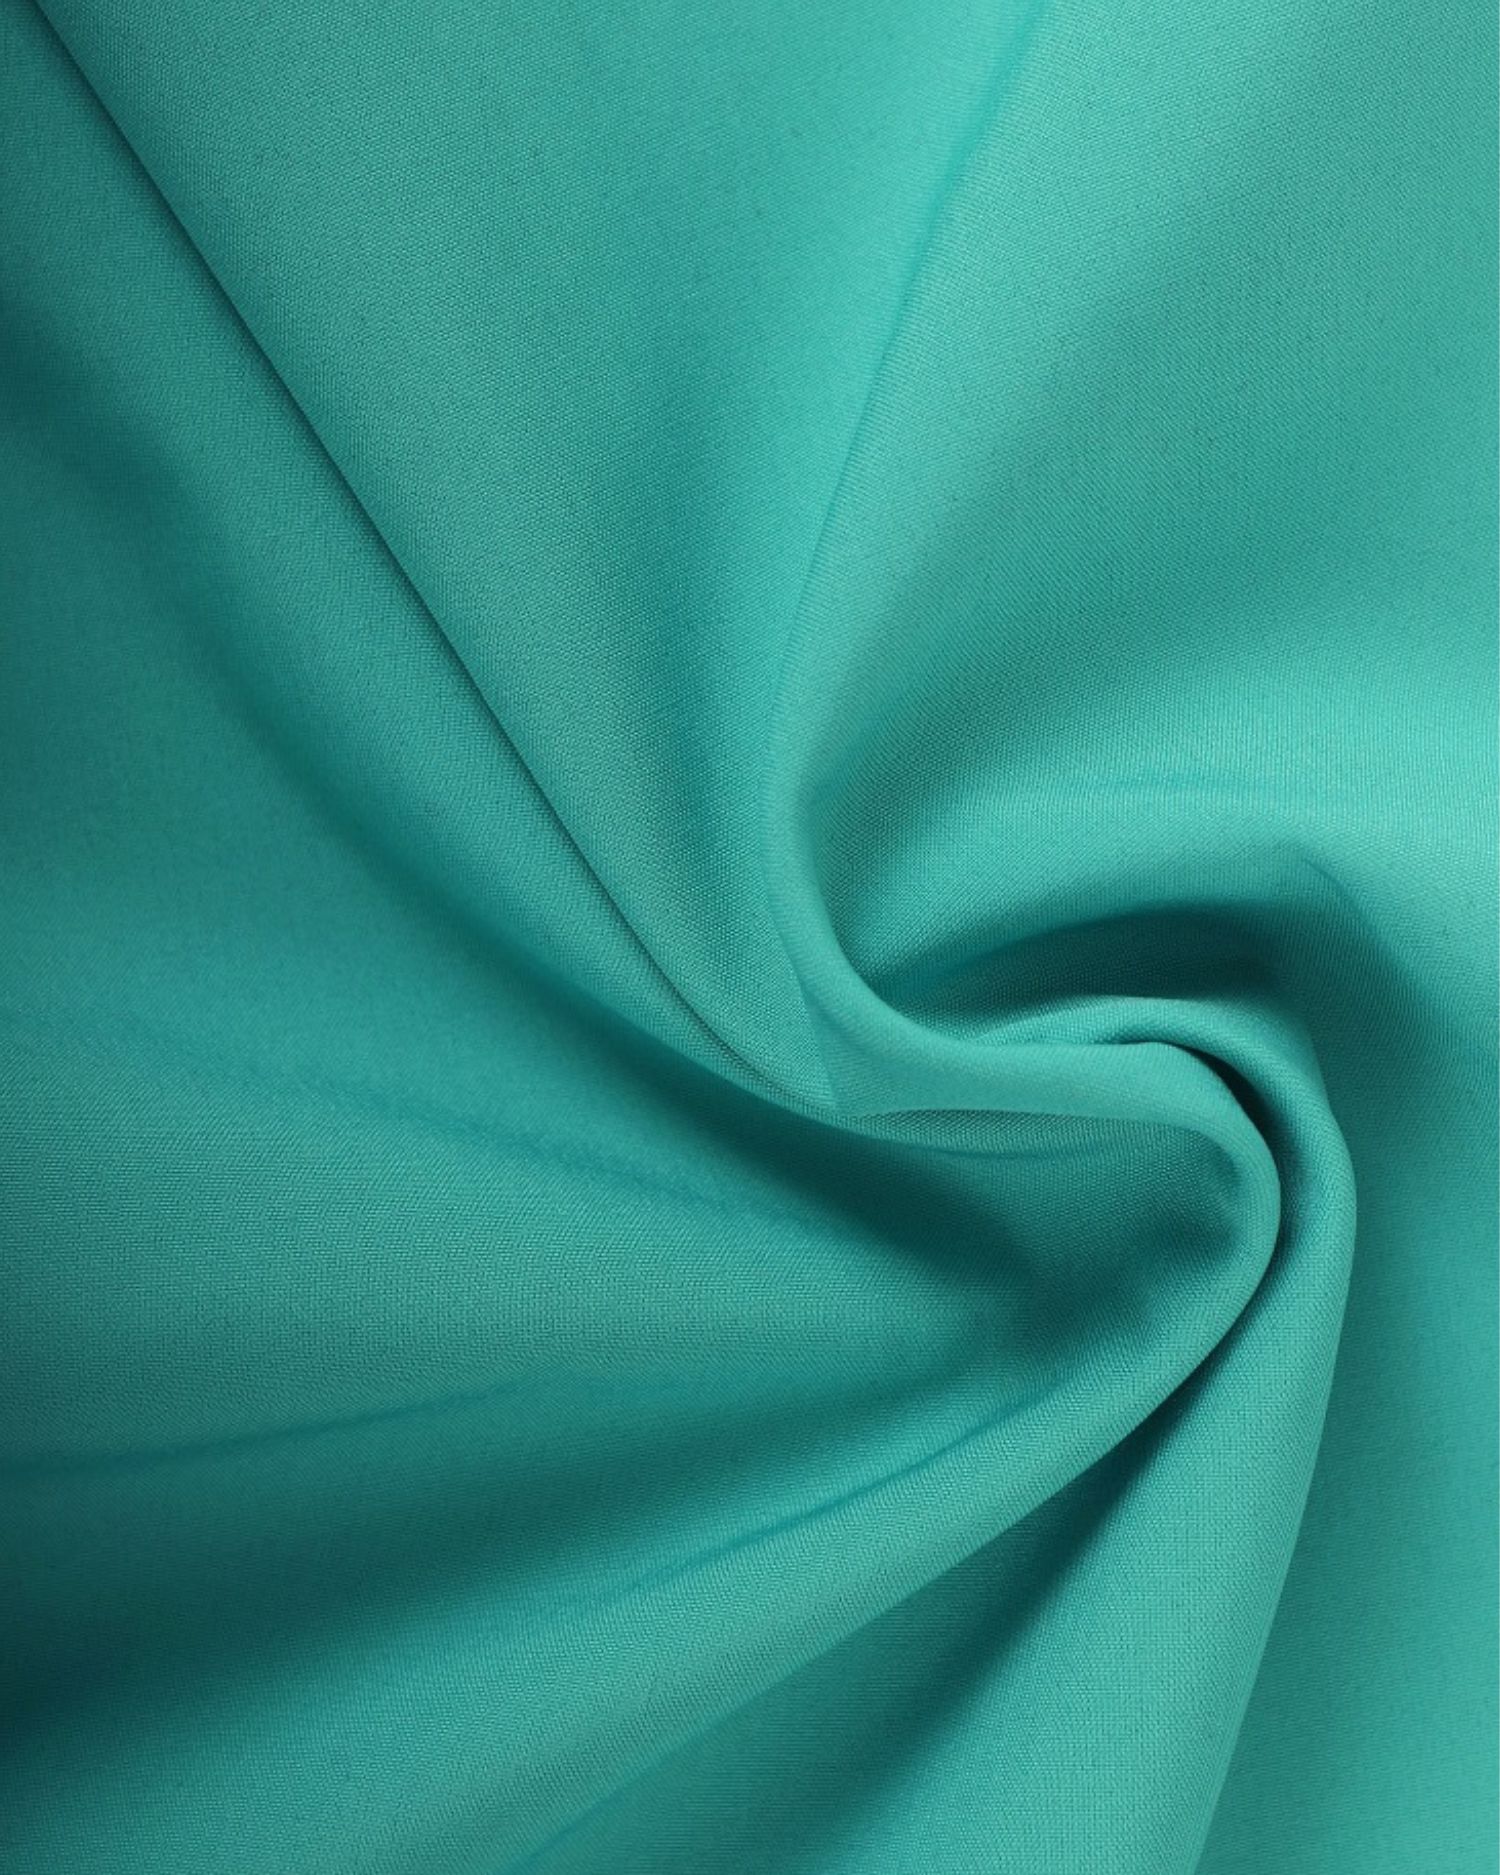 Winter softshell with fleece, 1 meter, turquoise